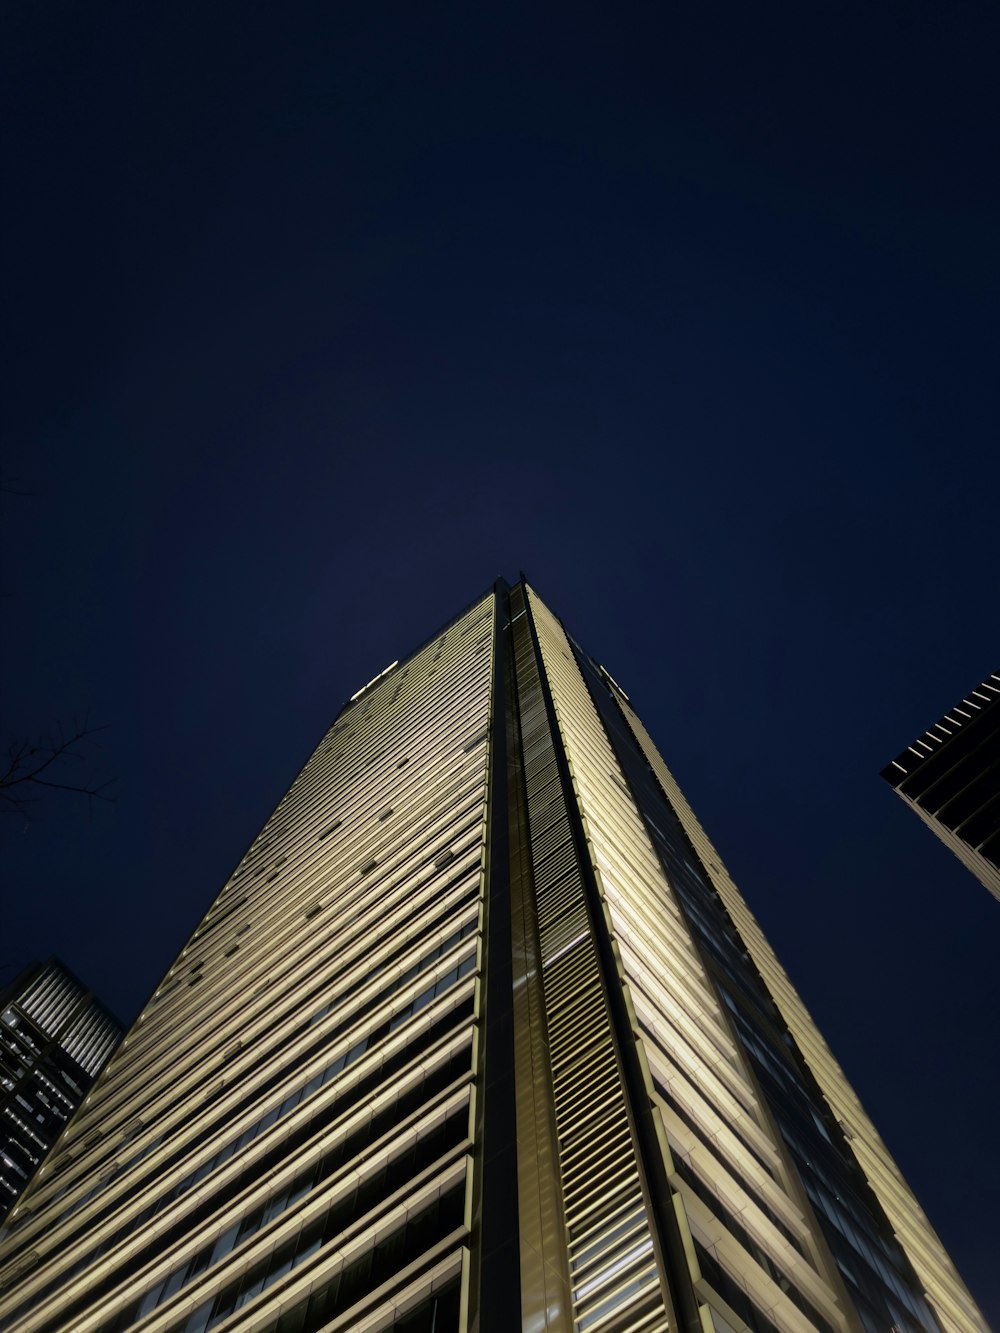 looking up at a tall building at night